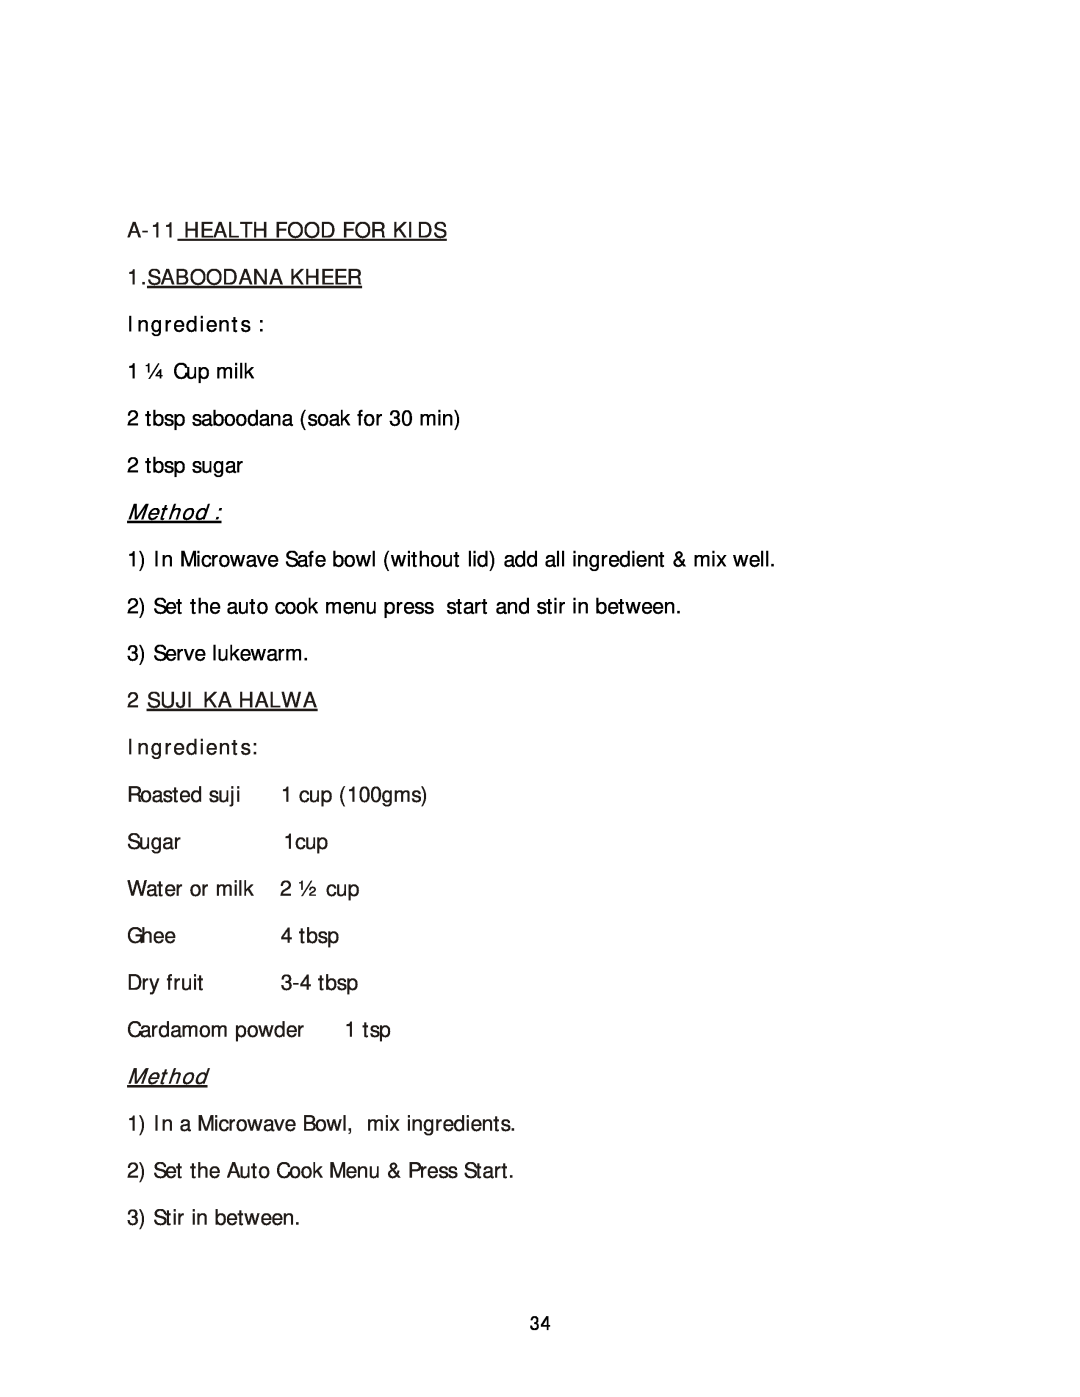 Haier HIL 2810EGCB manual A-11 HEALTH FOOD FOR KIDS 1.SABOODANA KHEER, Ingredients, Method, Suji Ka Halwa 